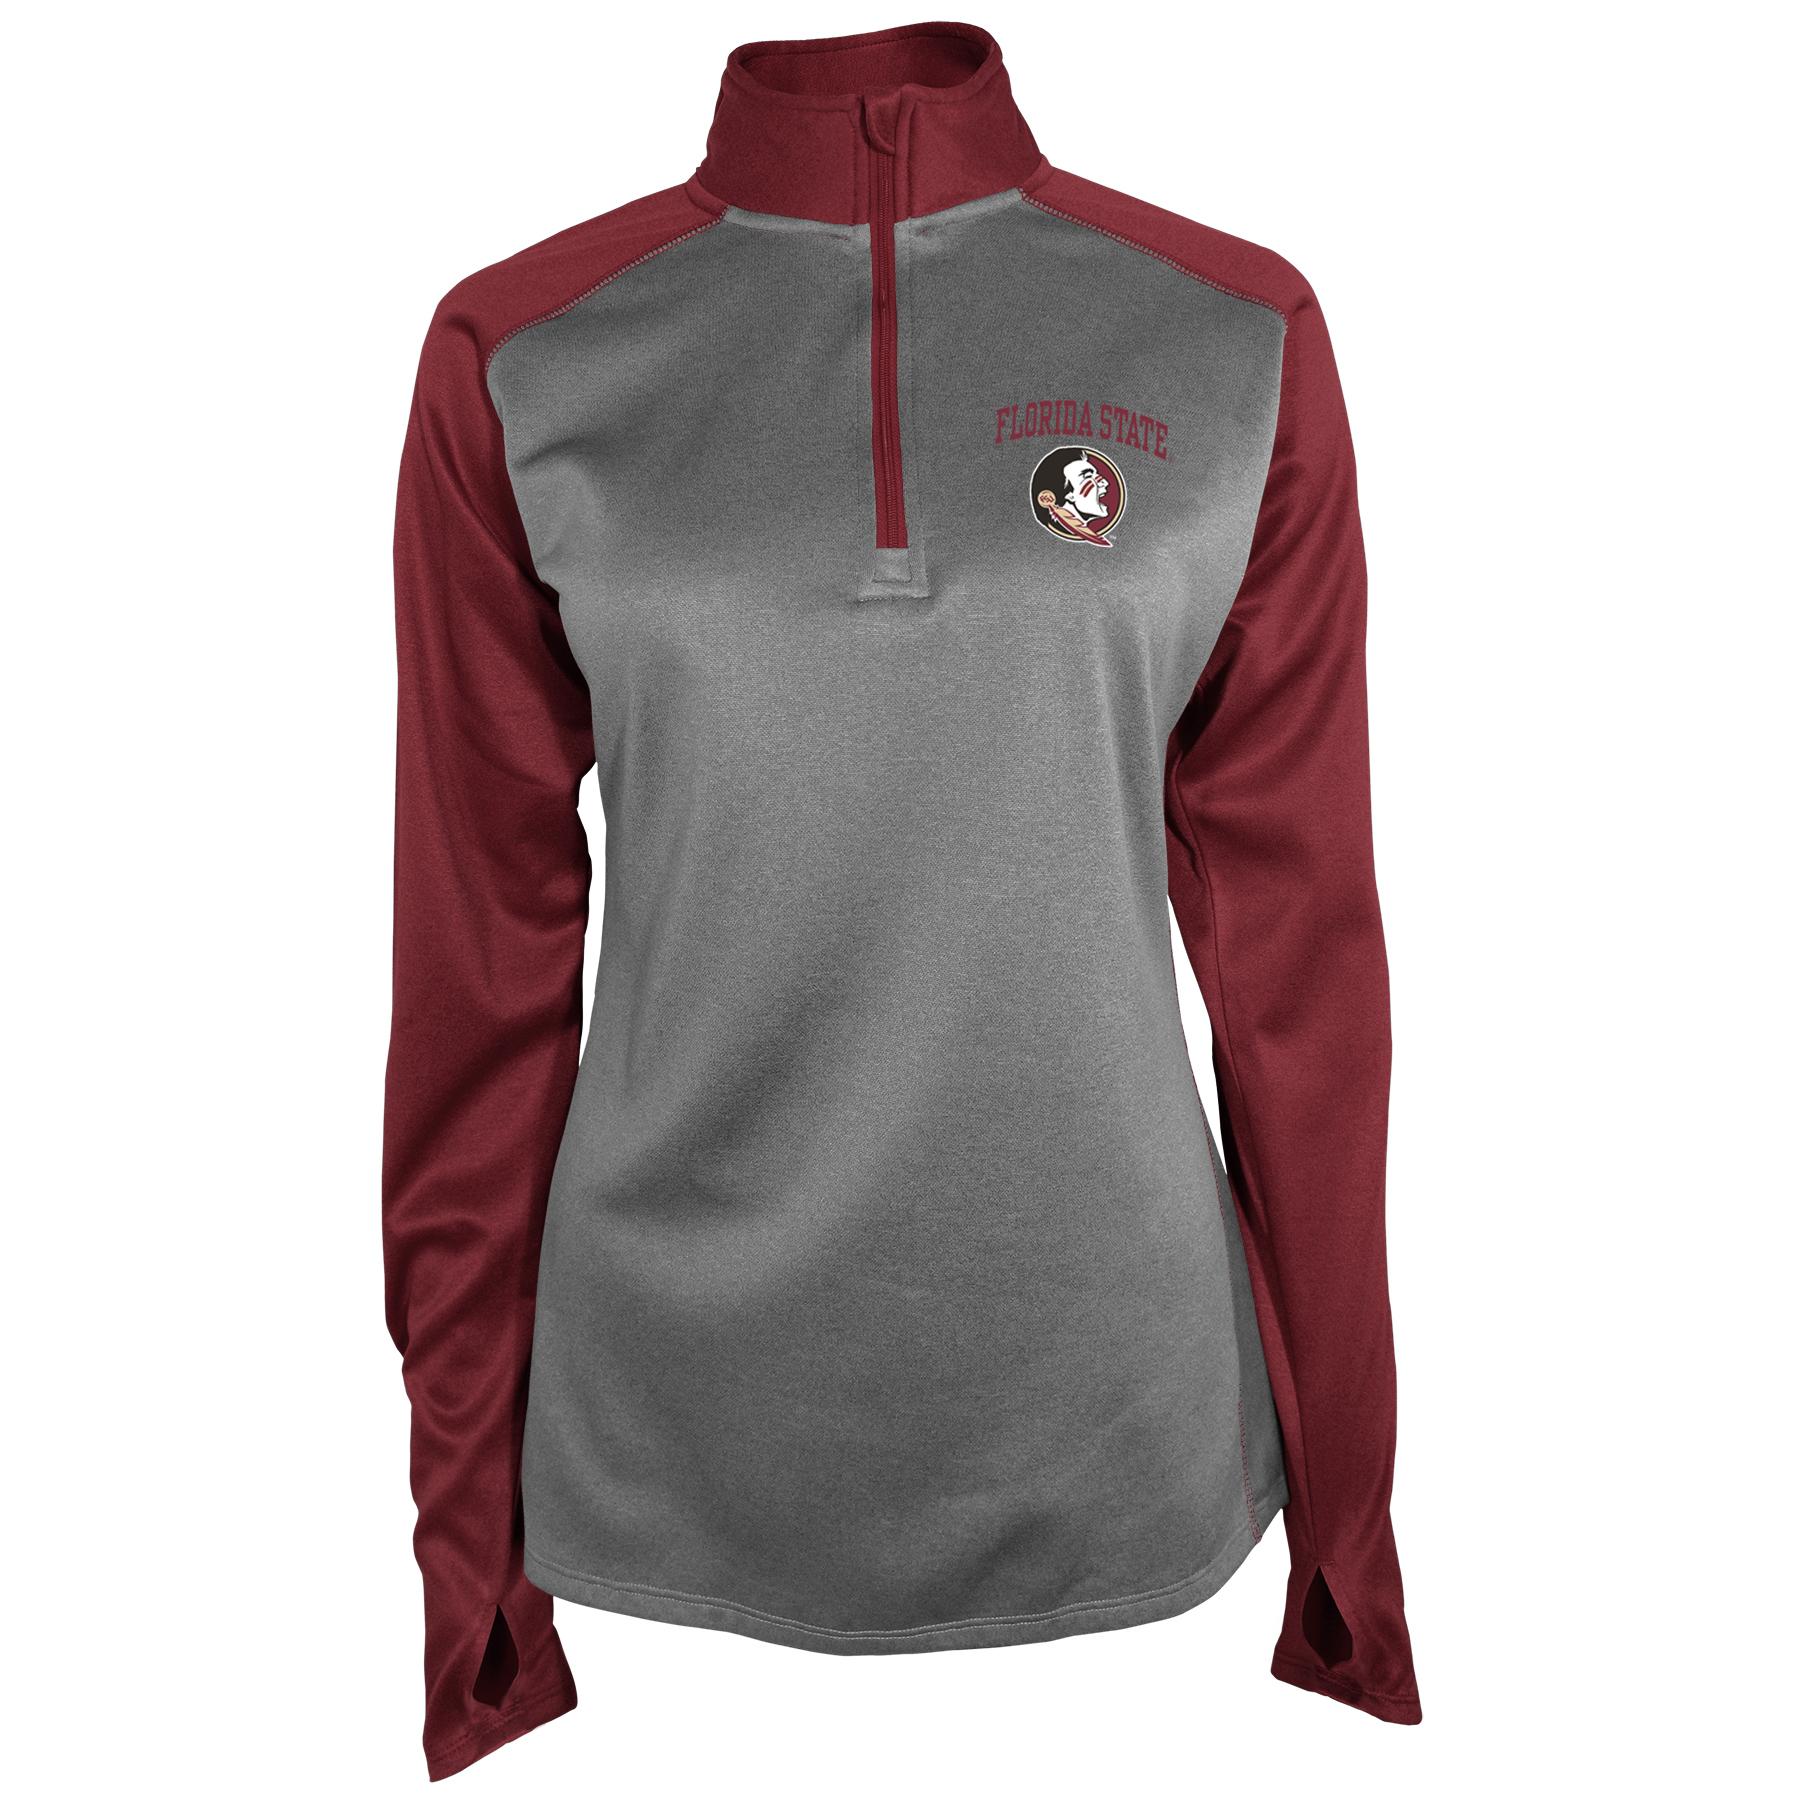 NCAA Women's Quarter-Zip Athletic Shirt - Florida State University